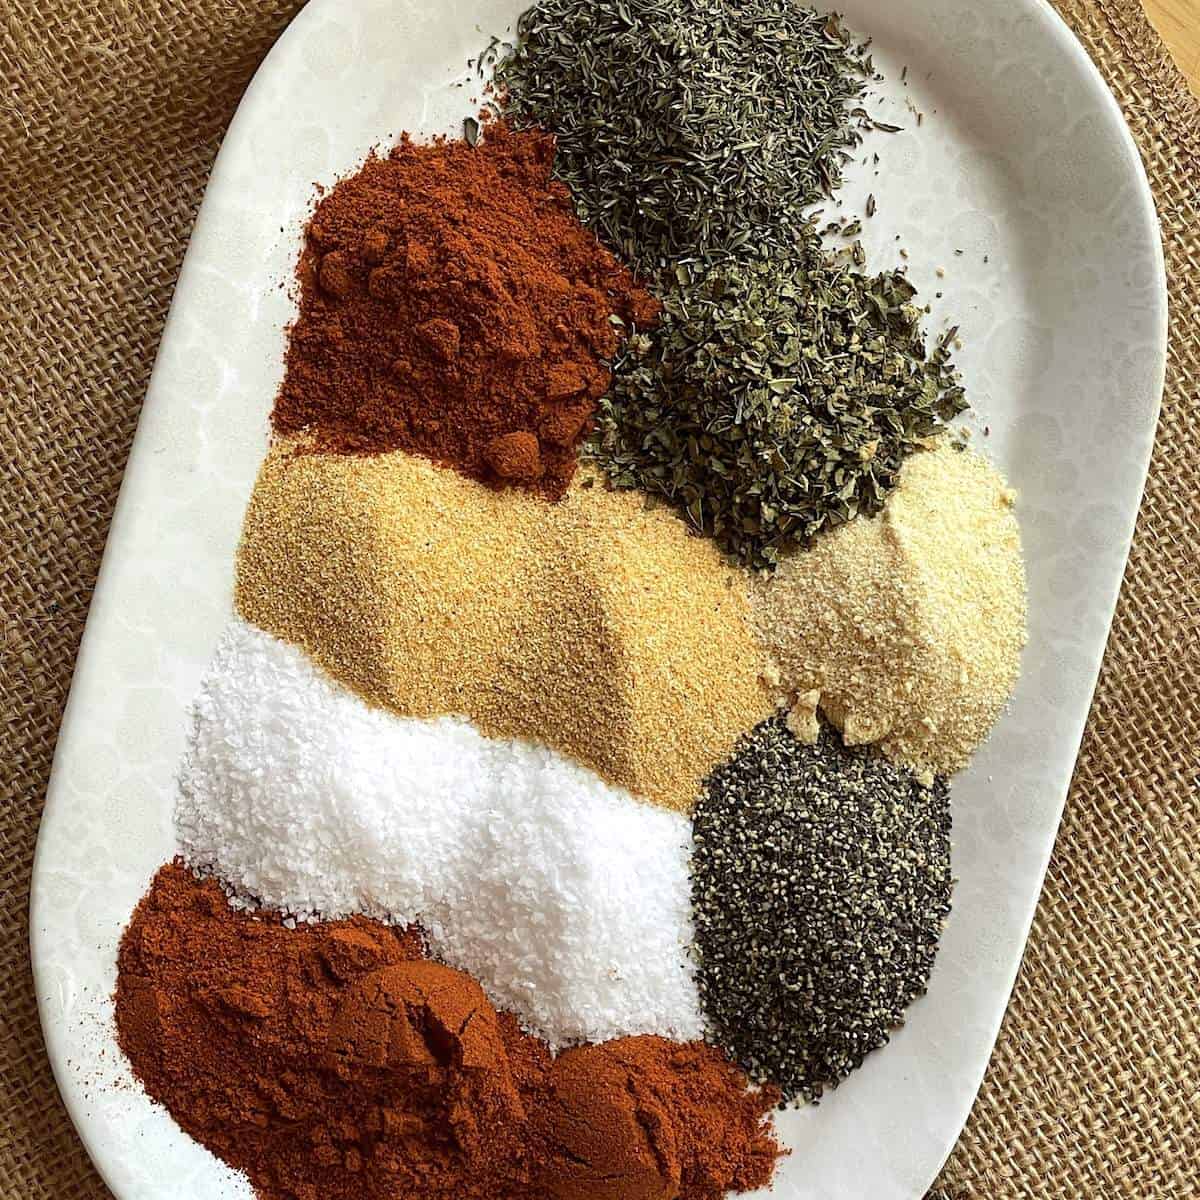 https://southern-bytes.com/wp-content/uploads/2022/04/homemade-cajun-spice-mix-recipe.jpg